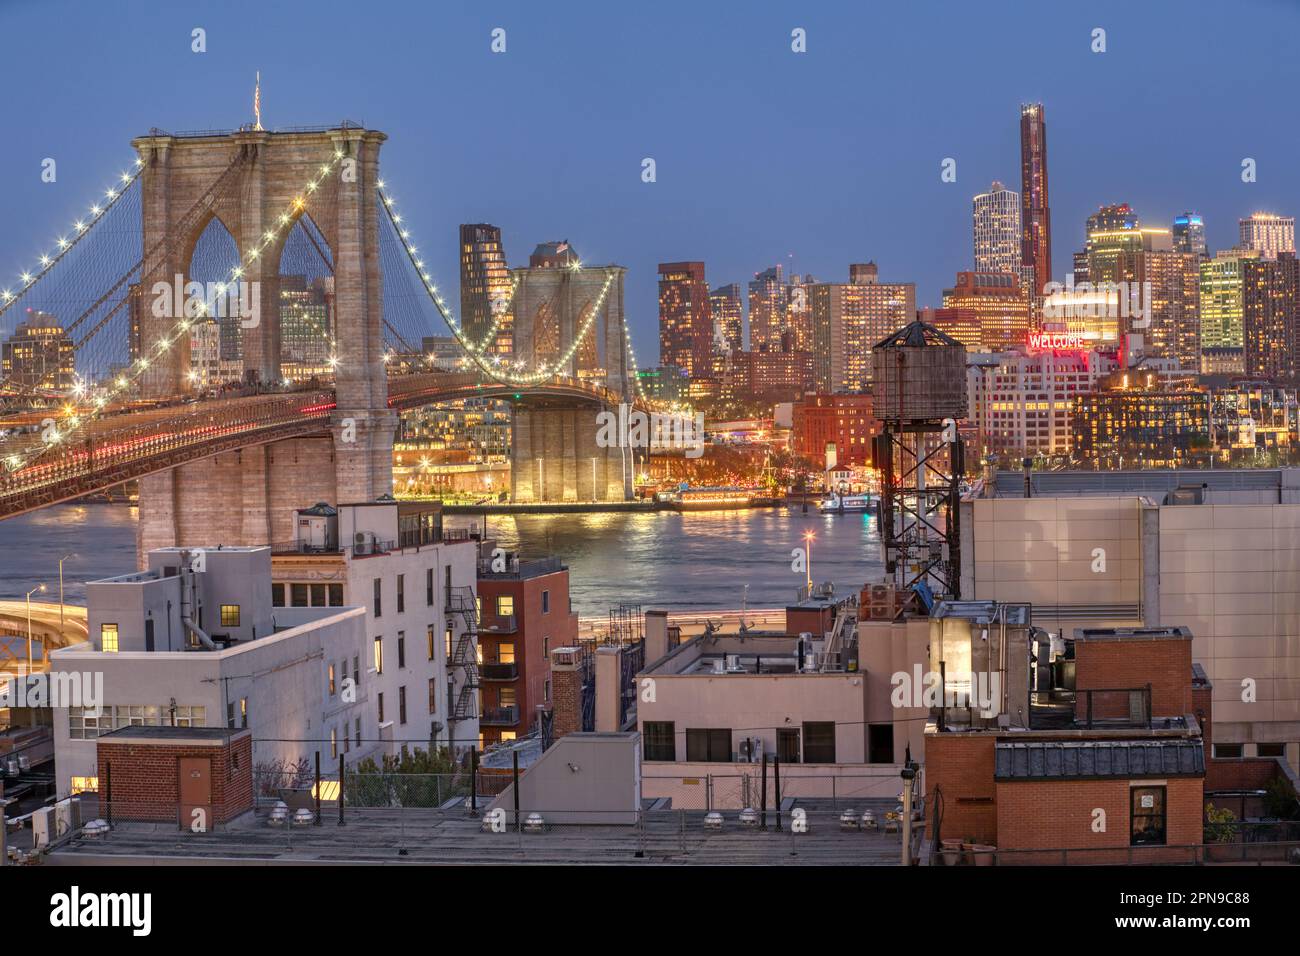 Pont de Brooklyn, vu du bas de Manhattan, vue de Brooklyn en arrière-plan. New York, États-Unis. Banque D'Images